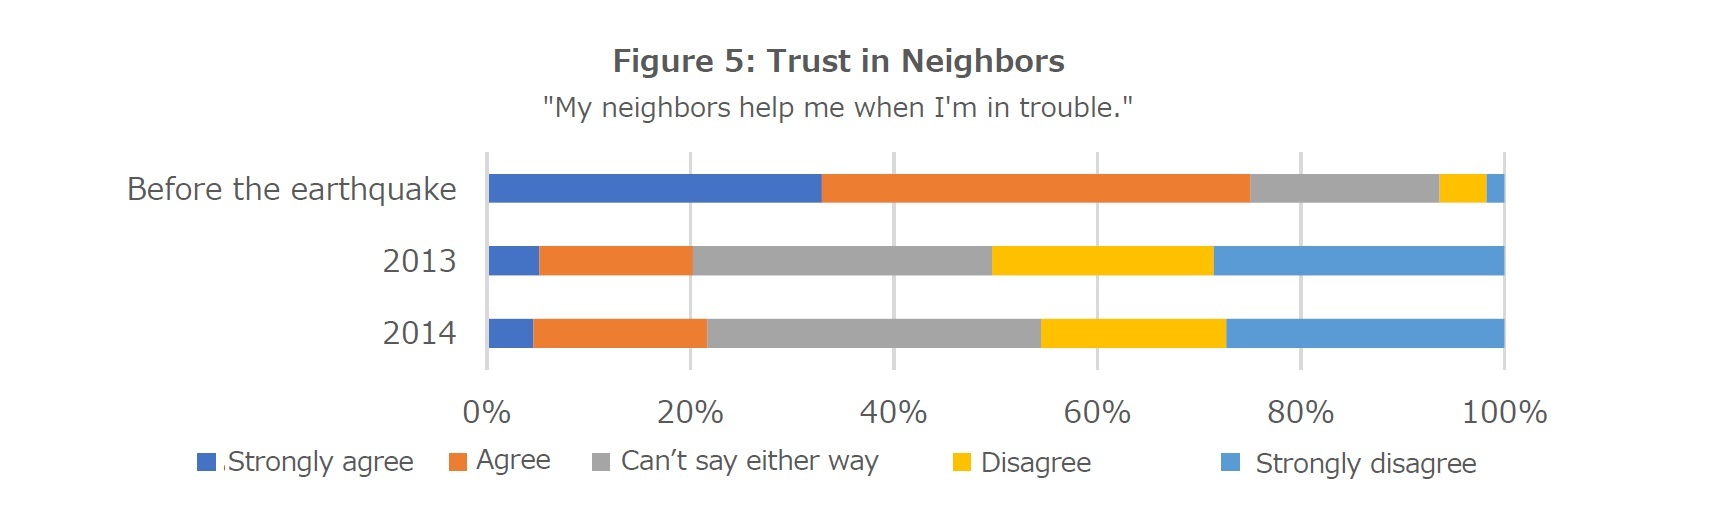 Figure 5: Trust in Neighbors